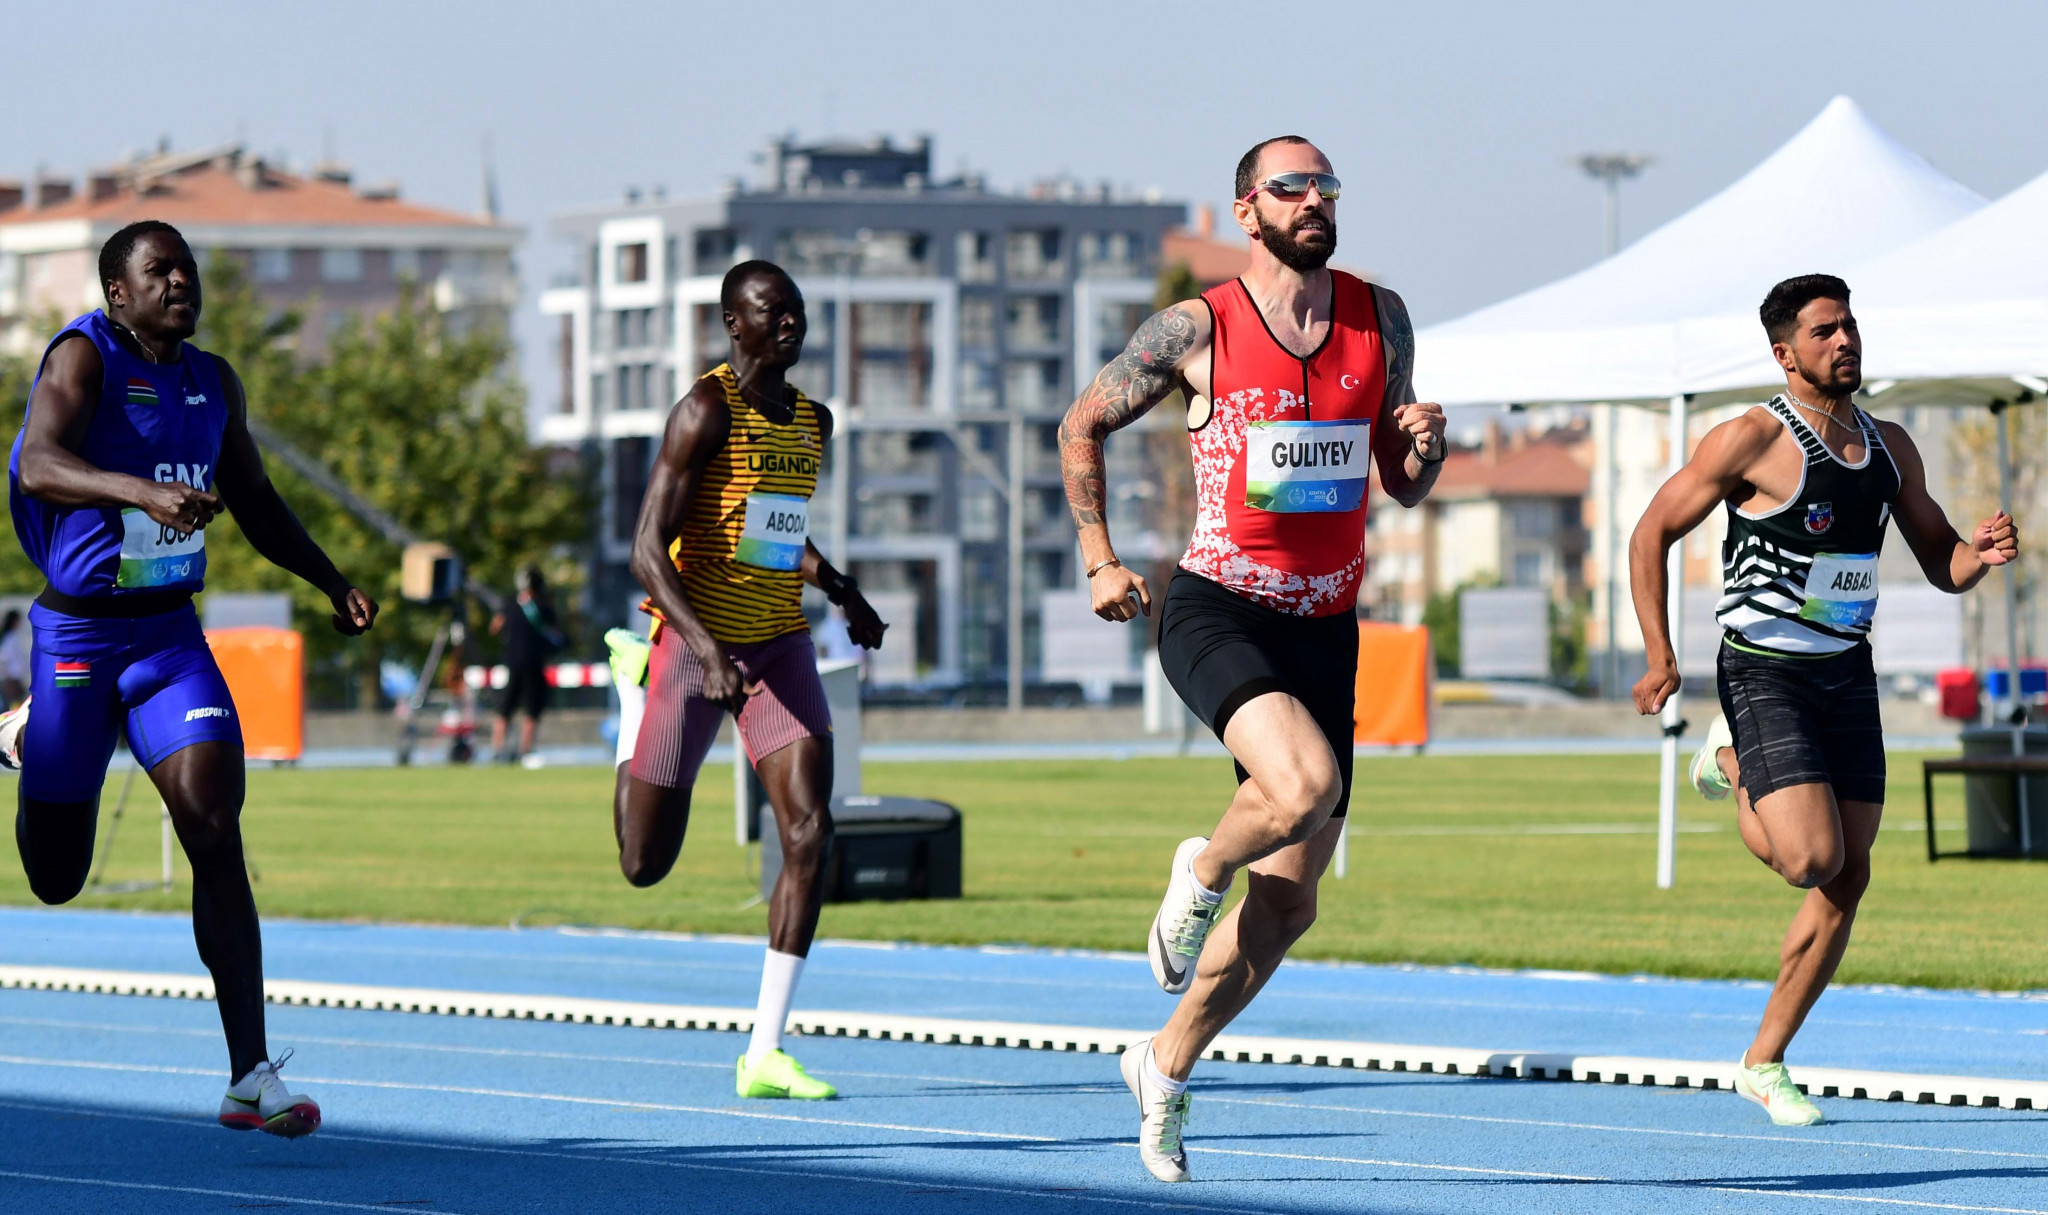 Turkish sprinter Ramil Guliyev, a 2017 world 200m champion, is among the star names competing in Konya ©Konya 2021